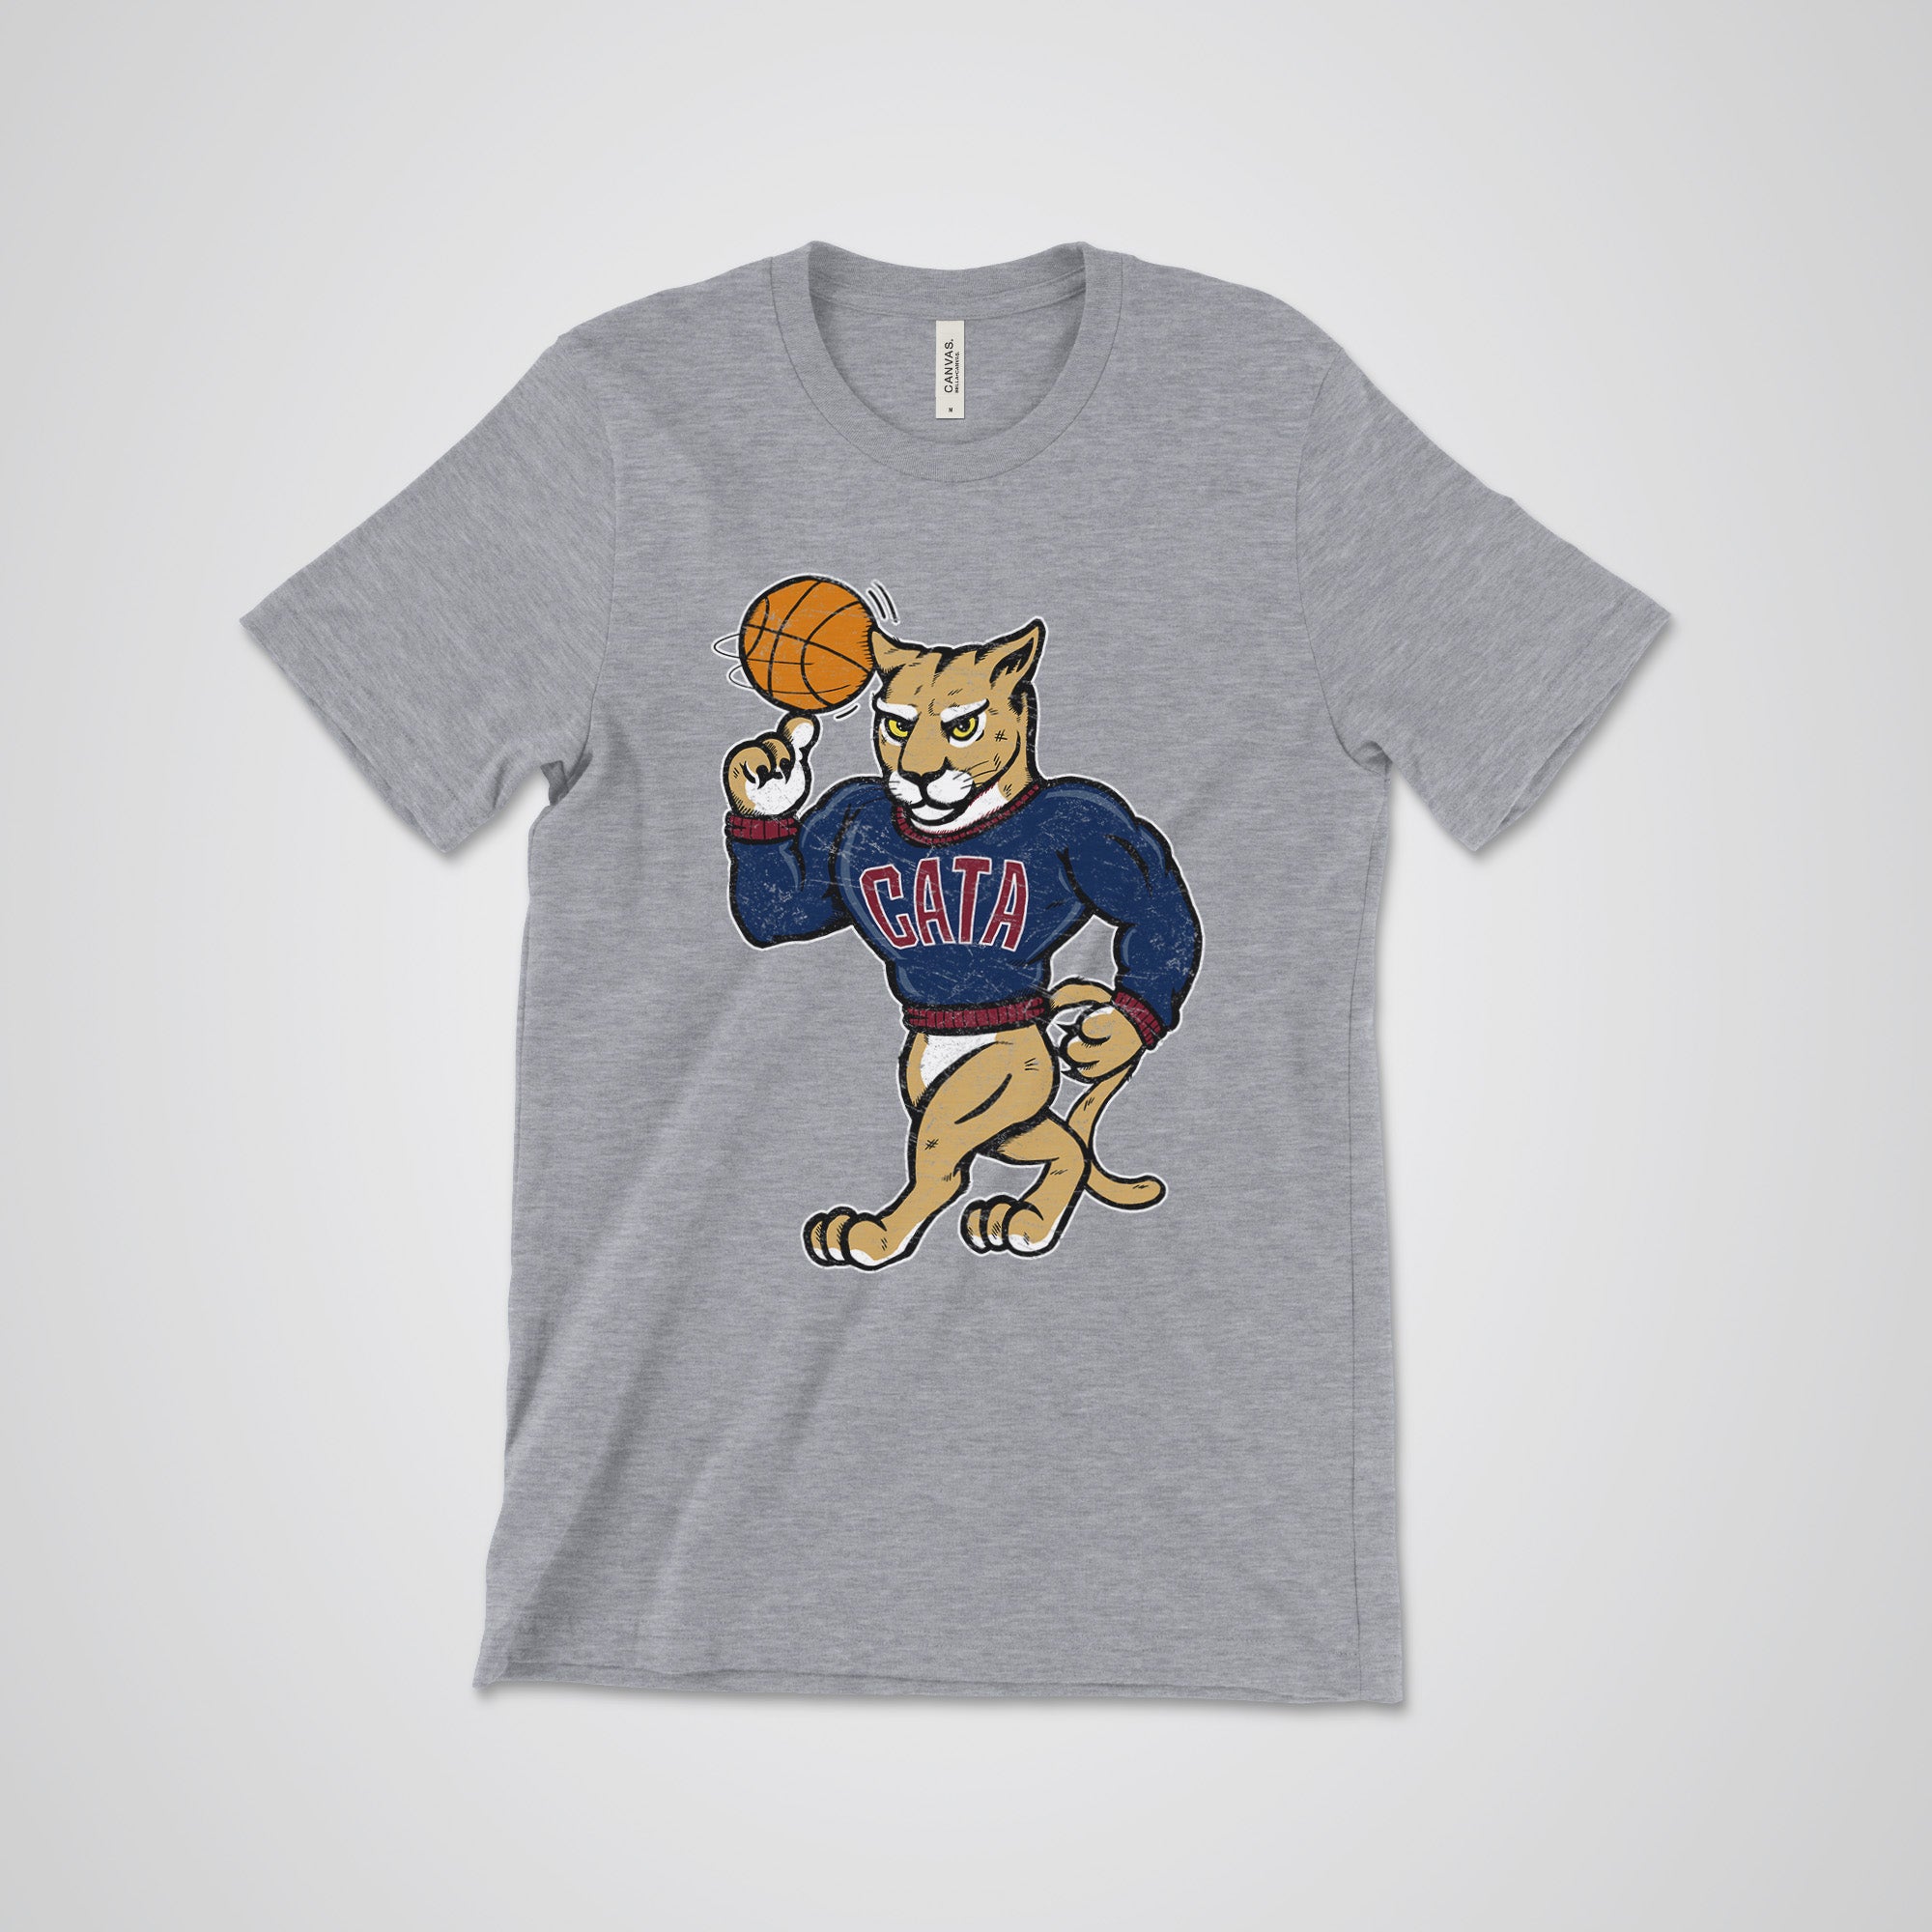 CATA Cougars Basketball Mascot Unisex Tee